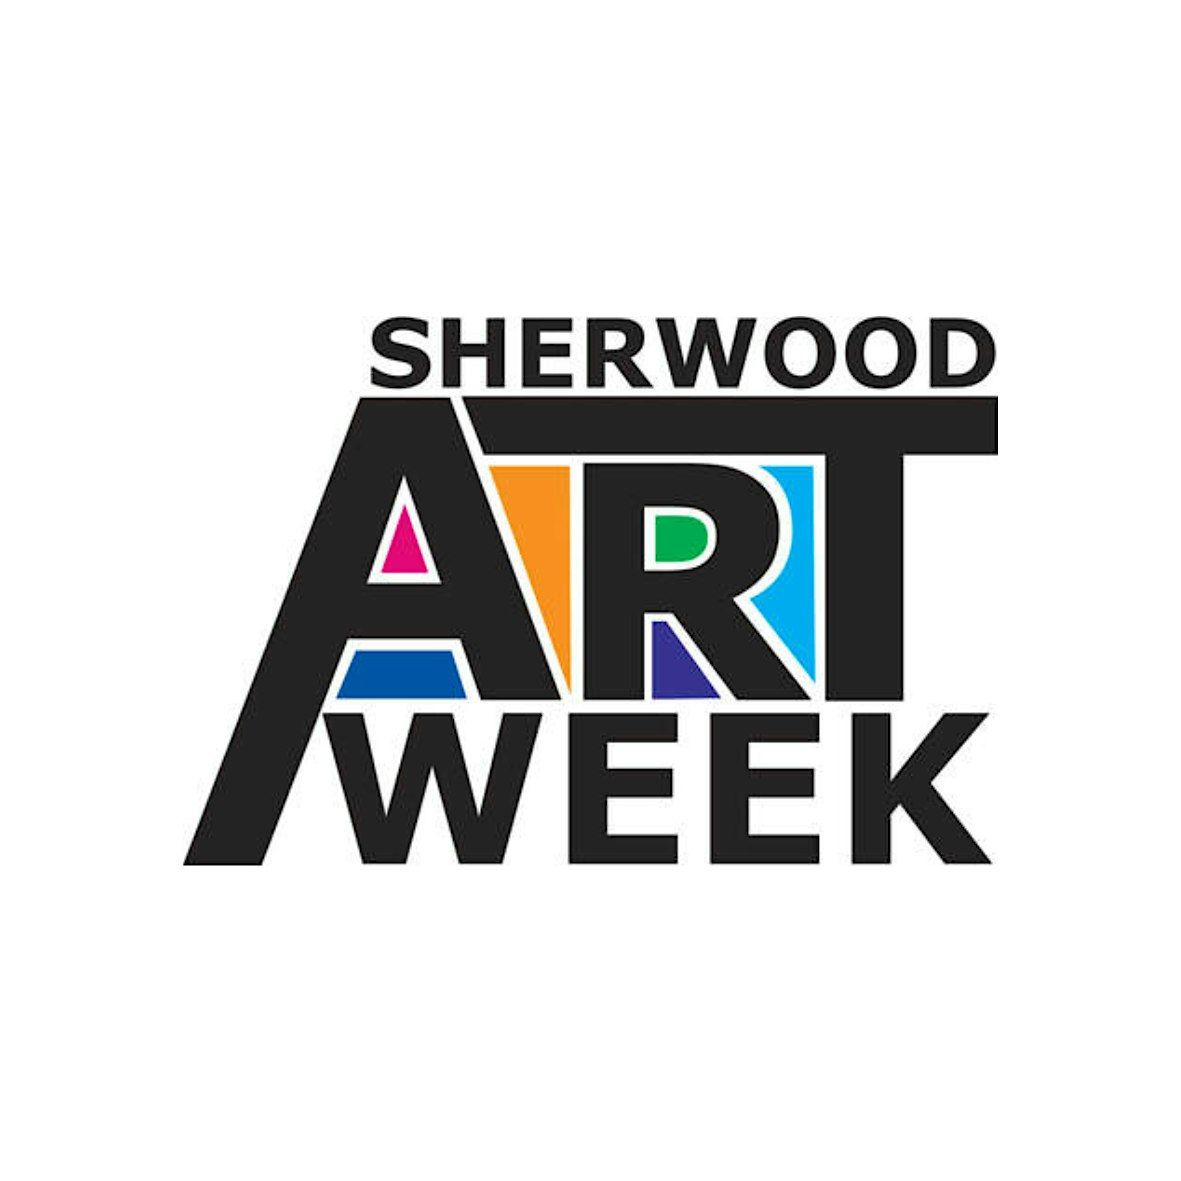 Sherwood Art Week - Copper Bangle Worksop lead by Viv Bowling